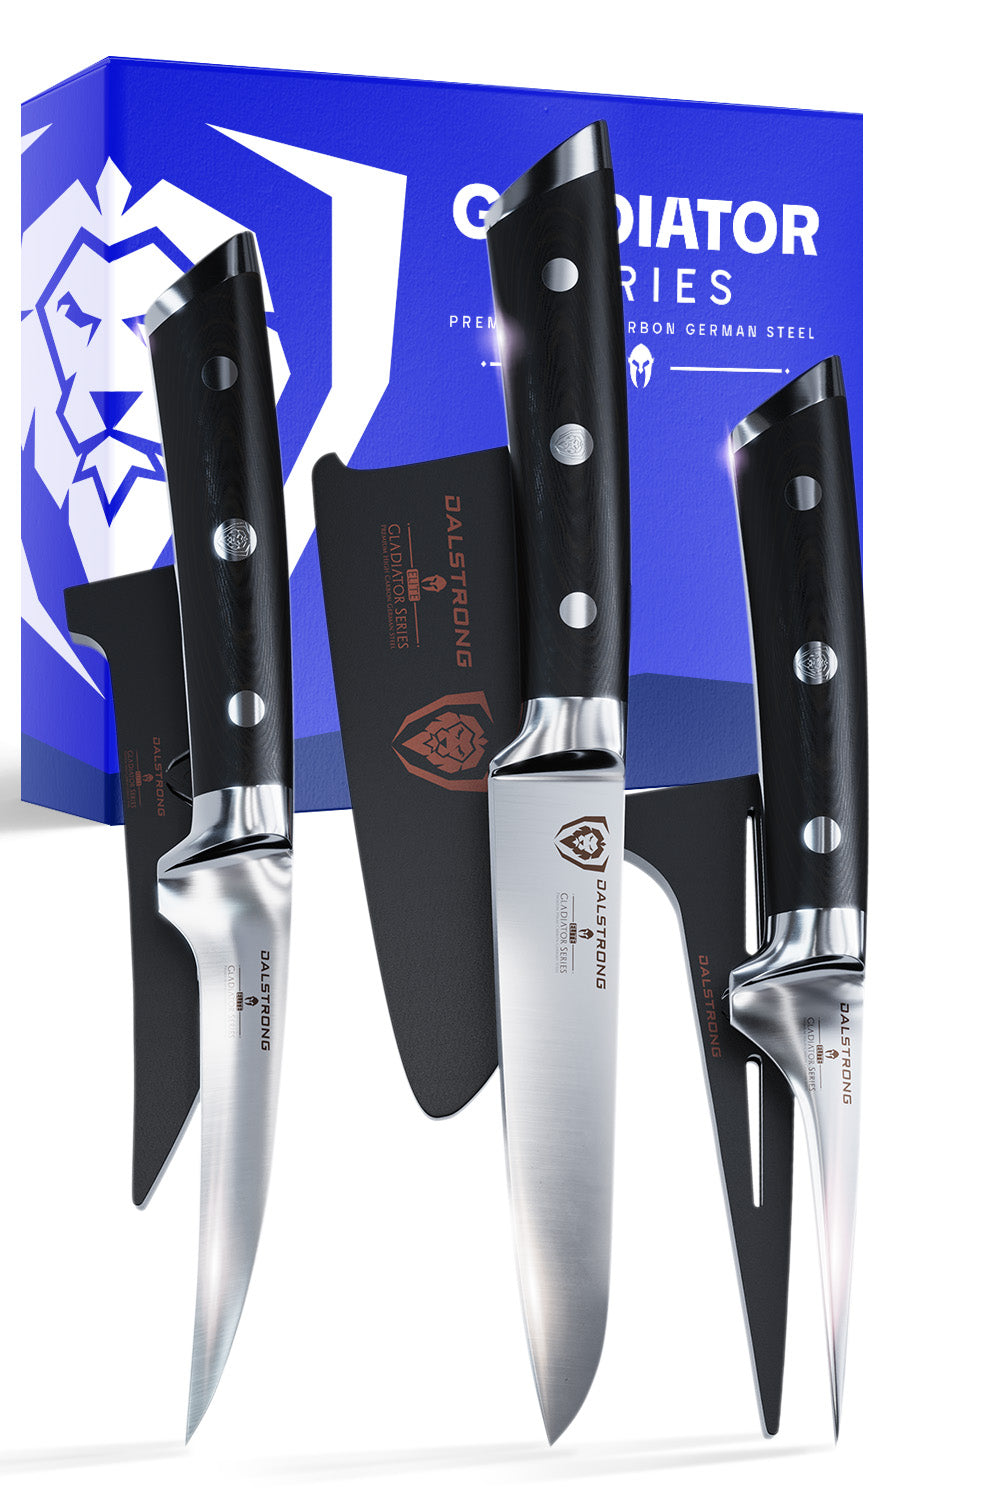 Fruit & Vegetable Paring Knife Set - 3 Piece | Gladiator Series ELITE | NSF Certified | Dalstrong ©